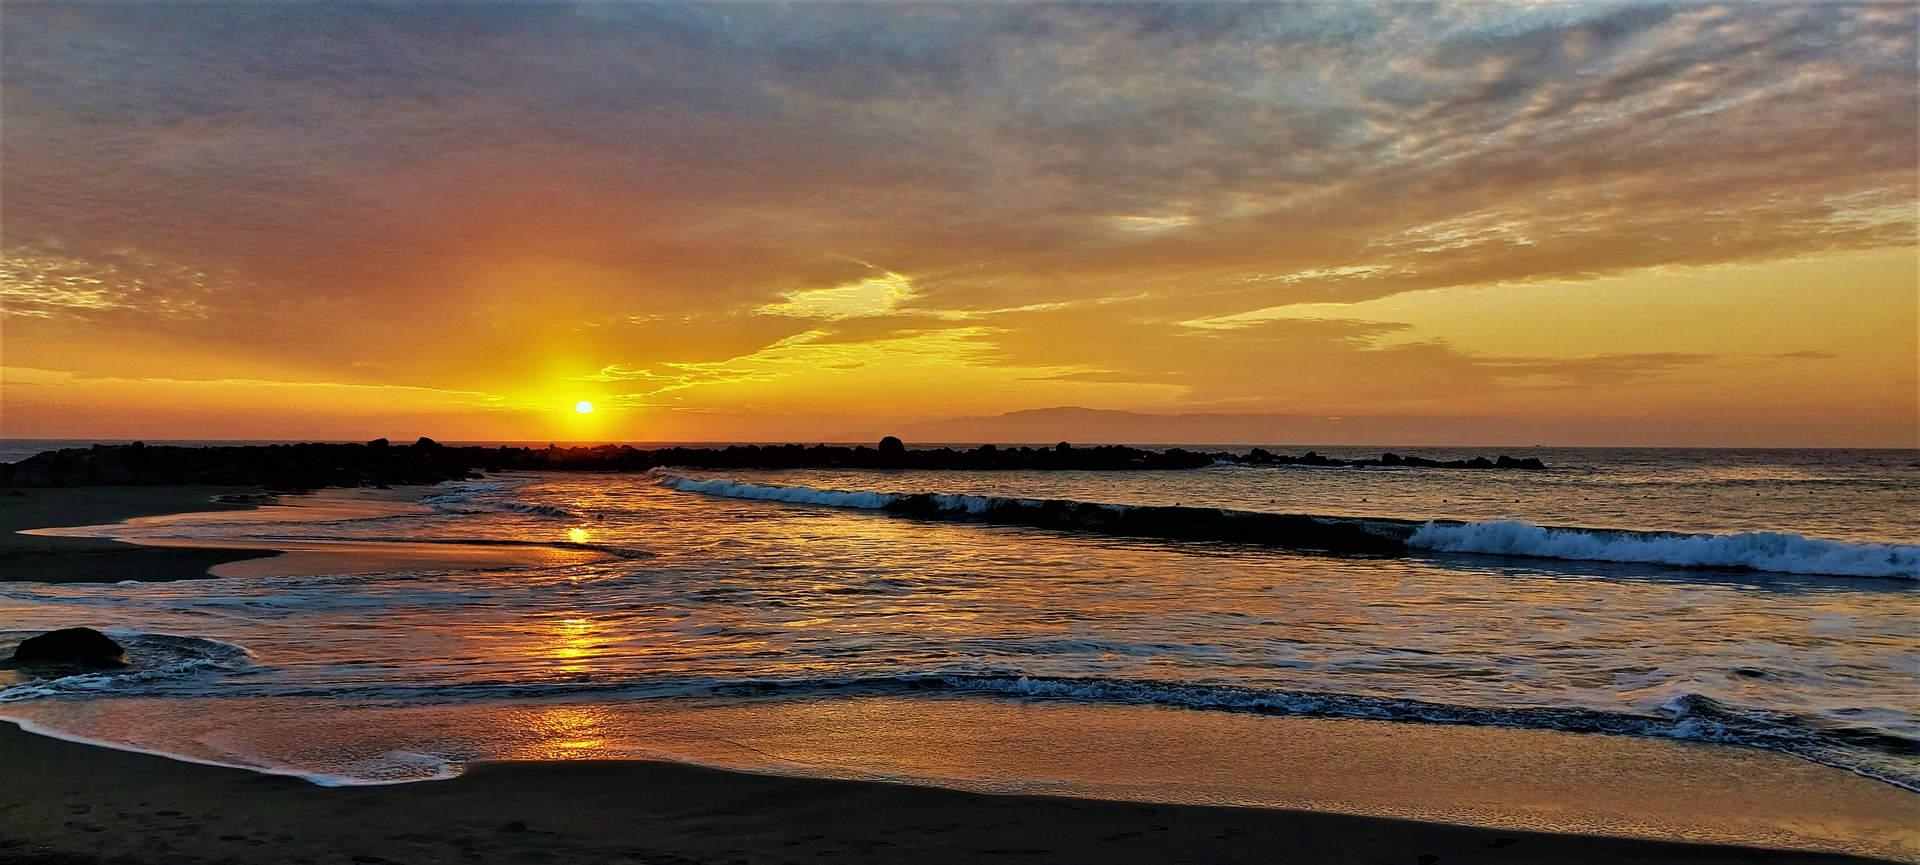 Playa Troya - Costa Adeje Beach (9)